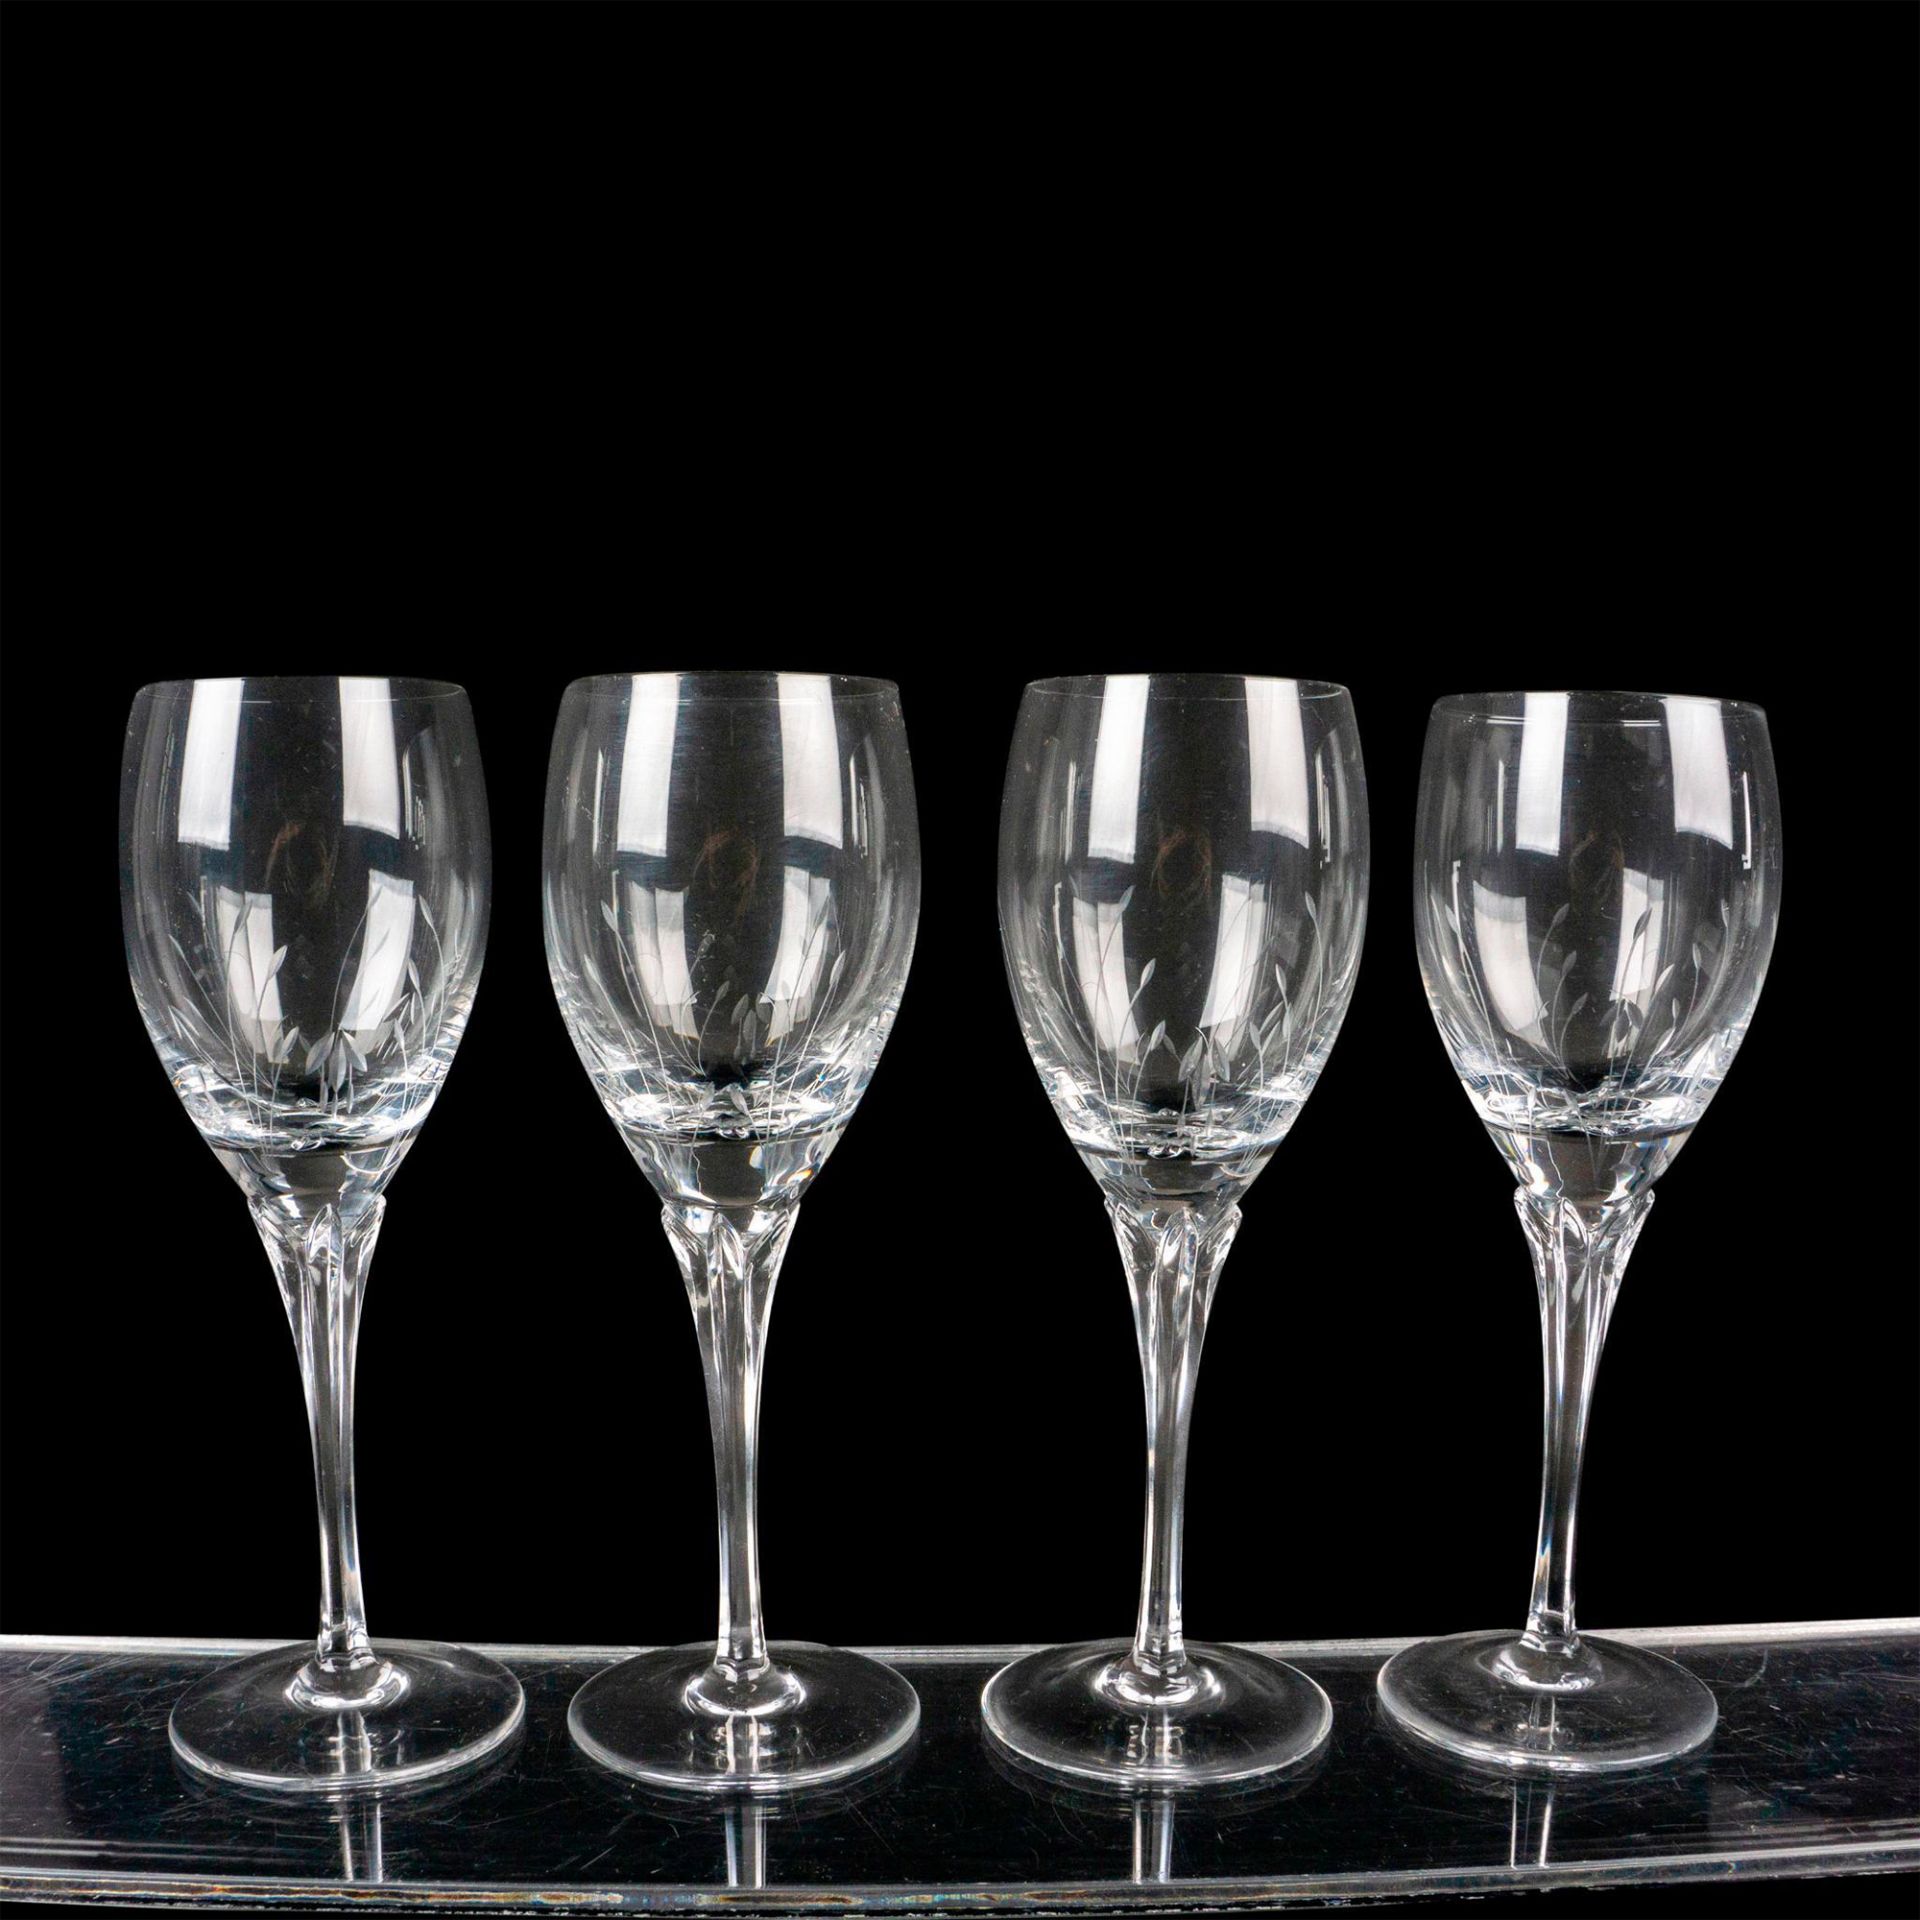 4pc Gorham Crystal Sherry/Dessert Wine Glasses, Jolie